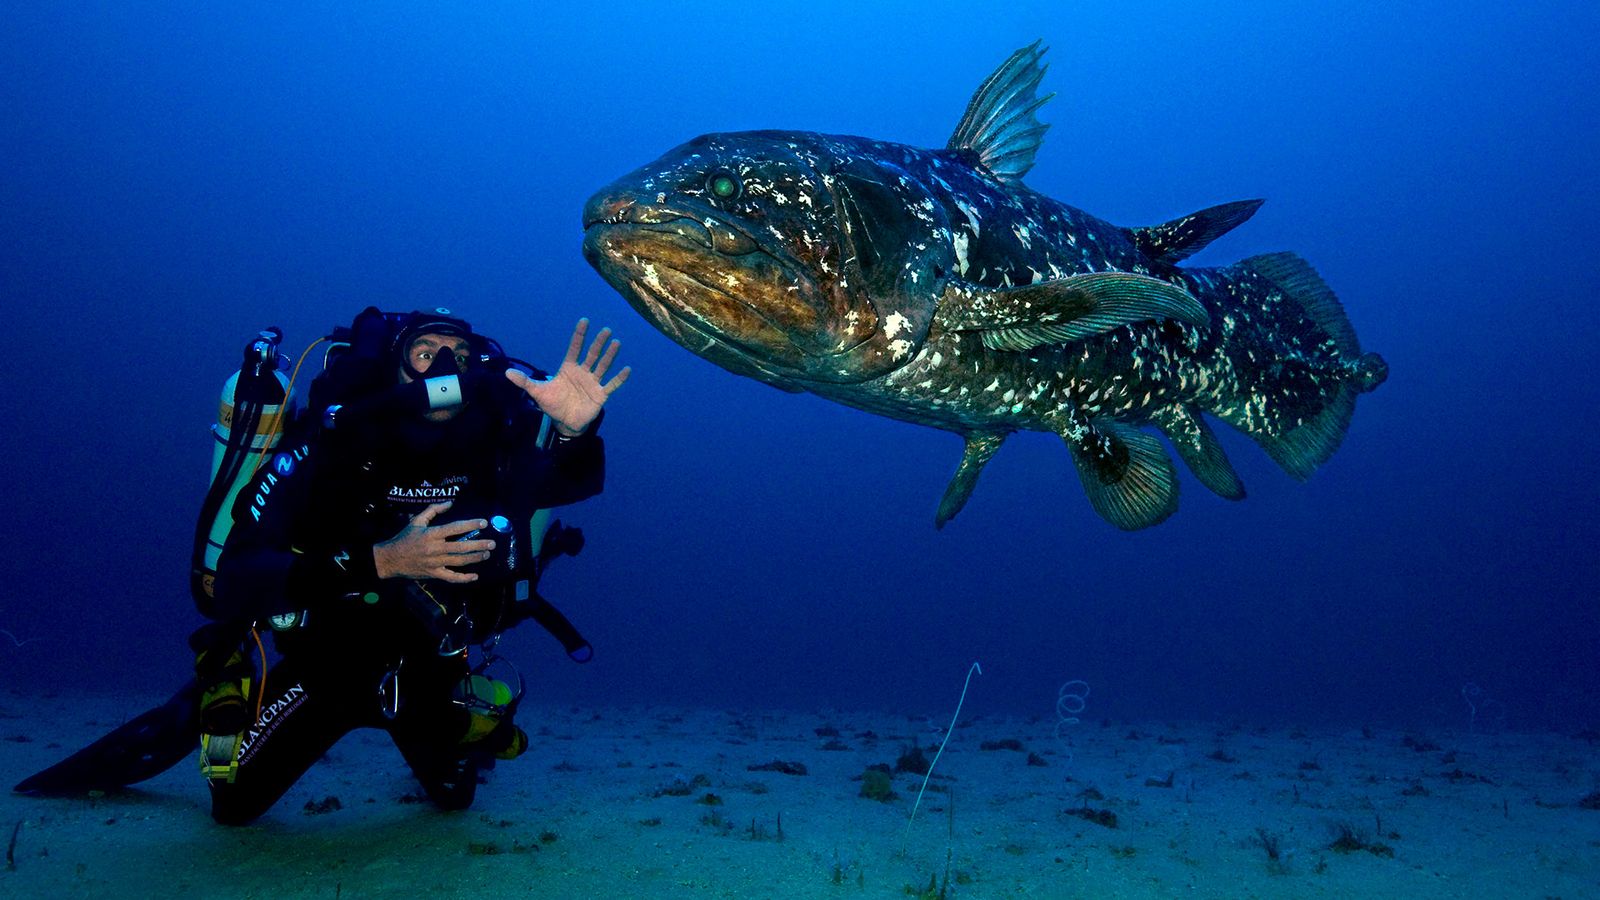 In 2010, Laurent Ballesta took the first photograph of a living coelacanth alongside diver, Cédric Gentil (Credit: Laurent Ballesta/Andromede Oceanologie)